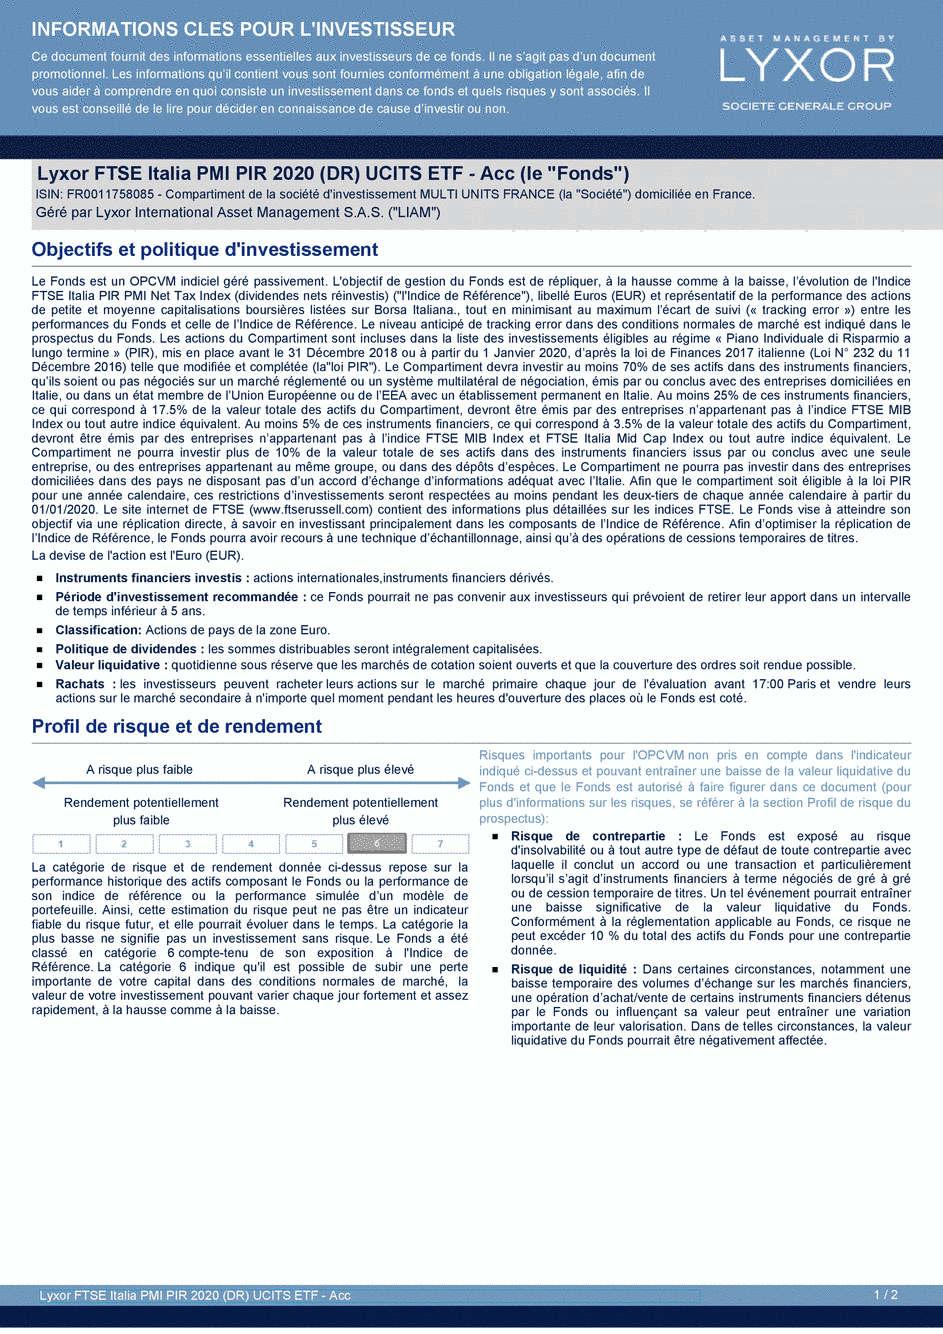 DICI Lyxor FTSE Italia PMI PIR 2020 (DR) UCITS ETF - Acc - 21/07/2020 - Français